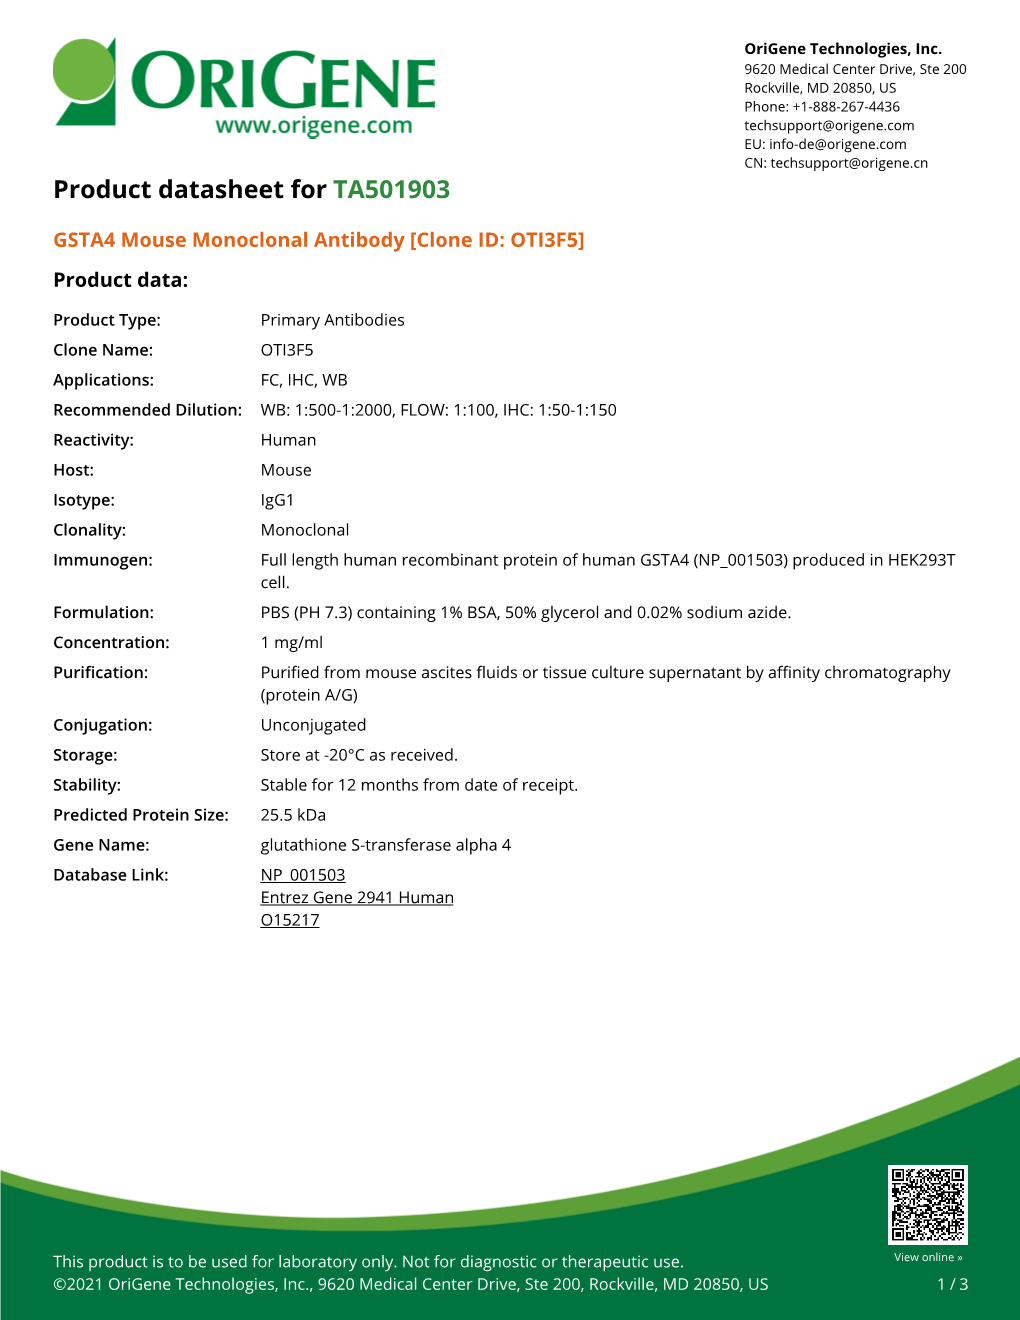 GSTA4 Mouse Monoclonal Antibody [Clone ID: OTI3F5] Product Data